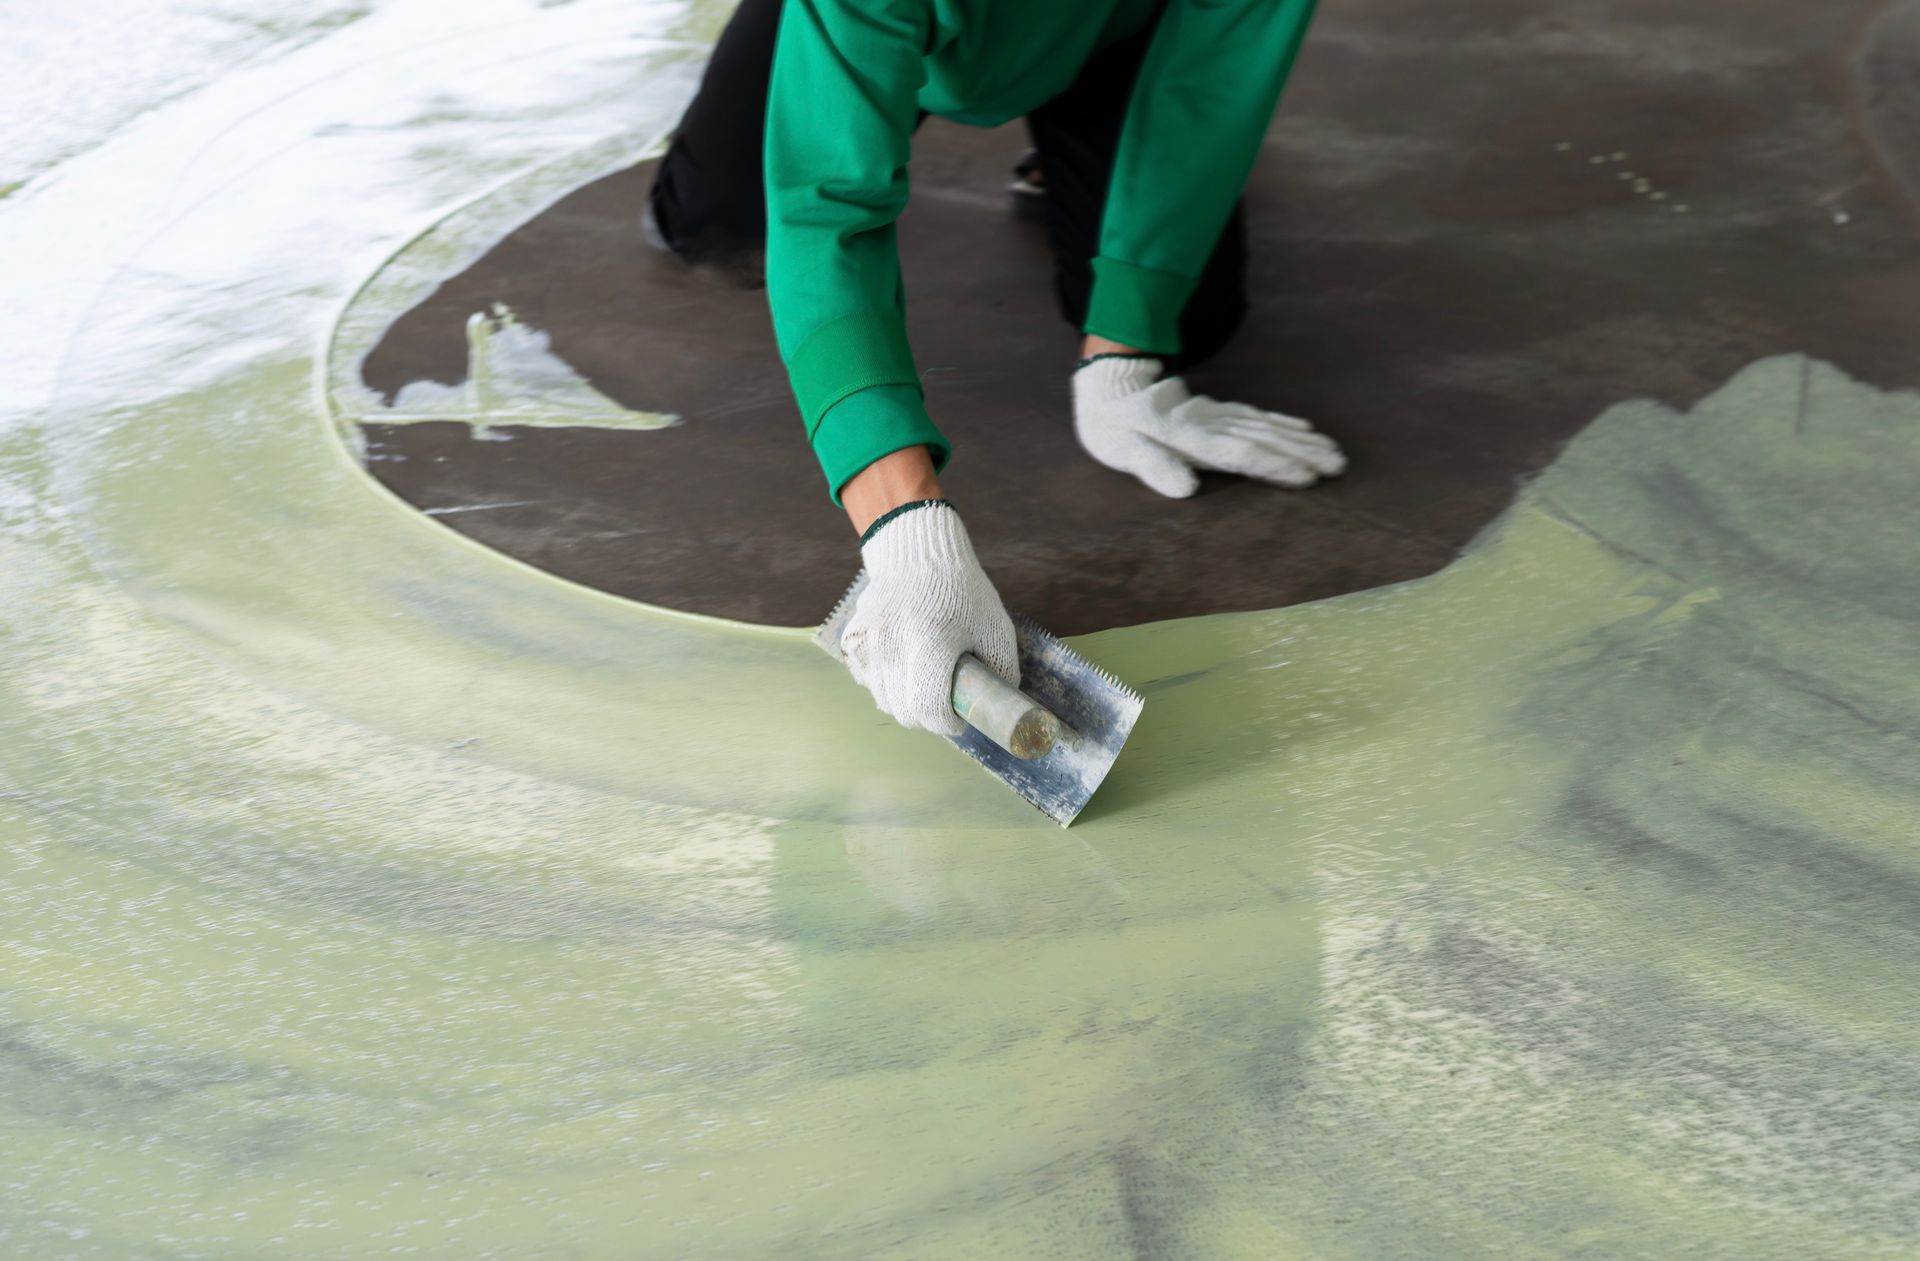 industrial epoxy floor coatings